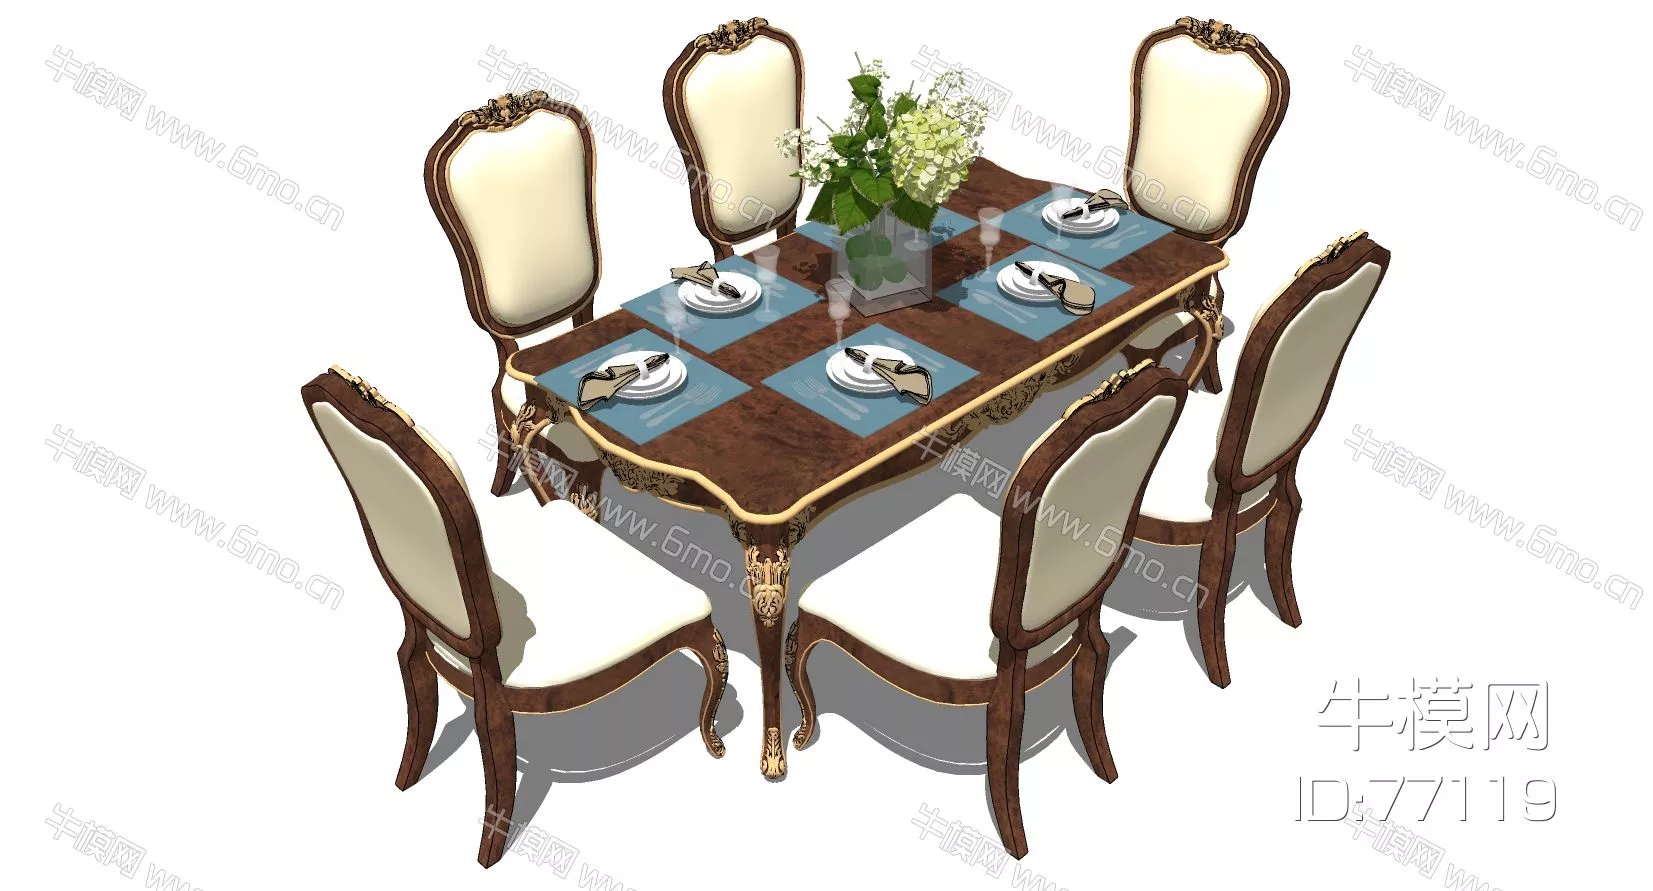 AMERICAN DINING TABLE SET - SKETCHUP 3D MODEL - ENSCAPE - 77119